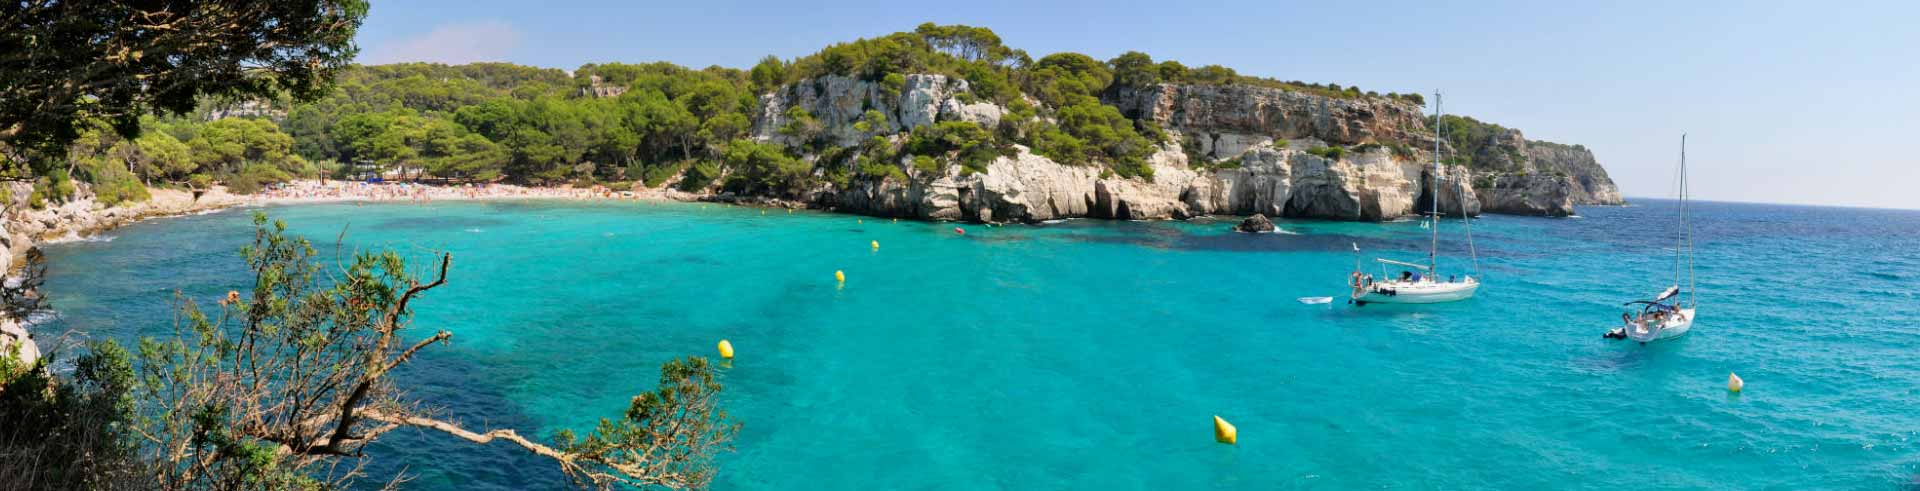 Alquiler de Furgonetas Menorca